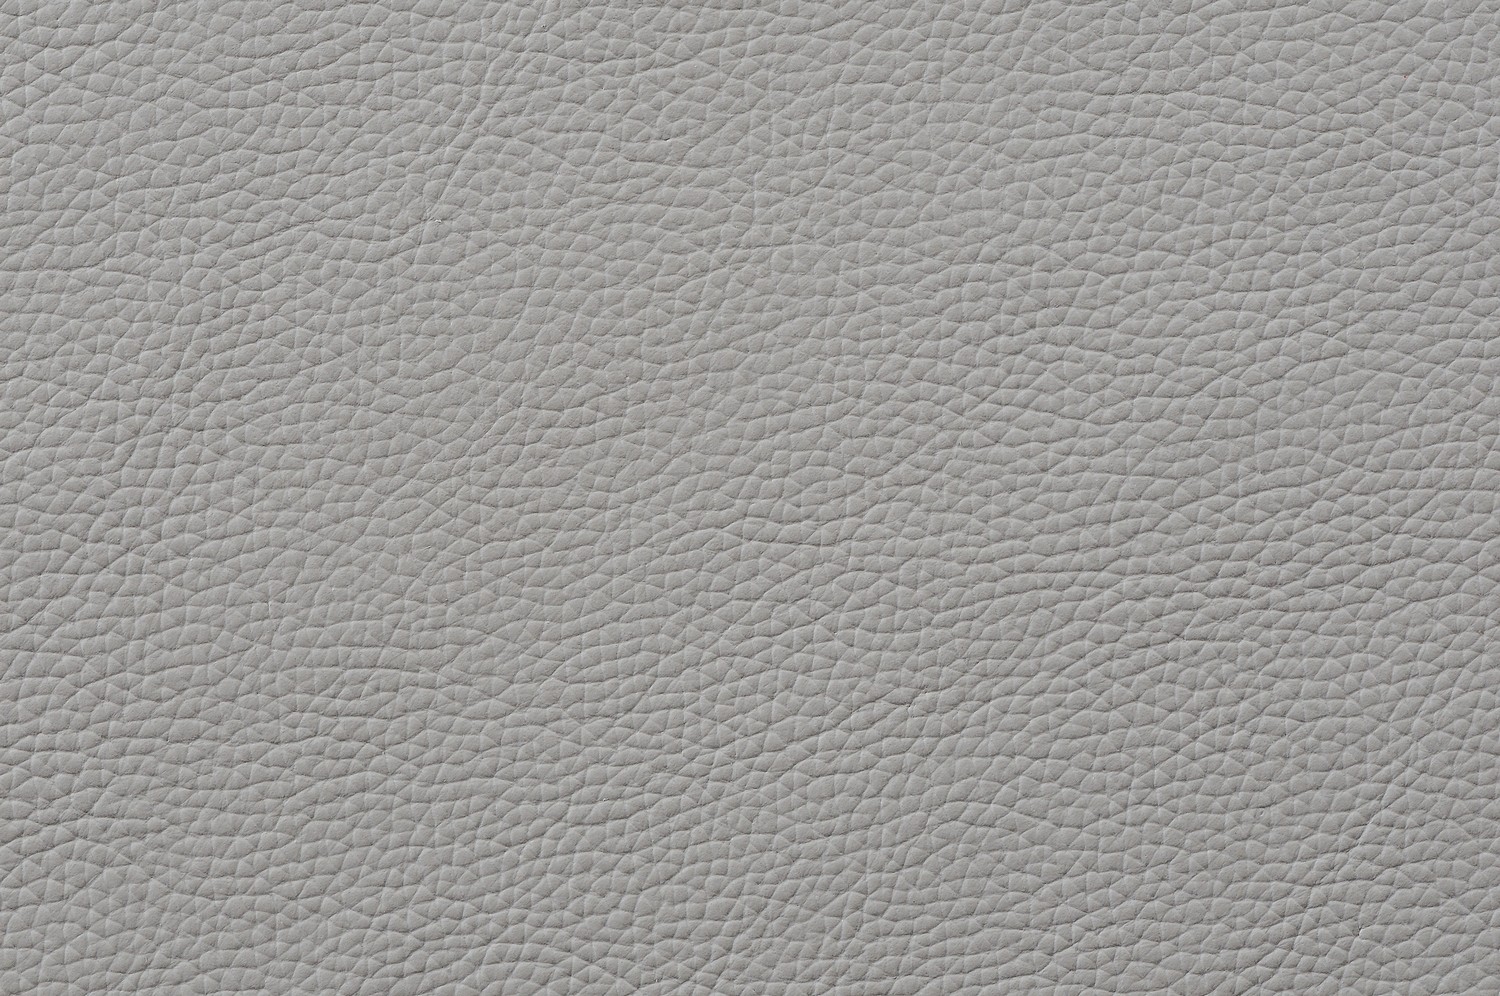 Homelegance Vortex Power Reclining Chair - Top Grain Leather Match - Light Grey